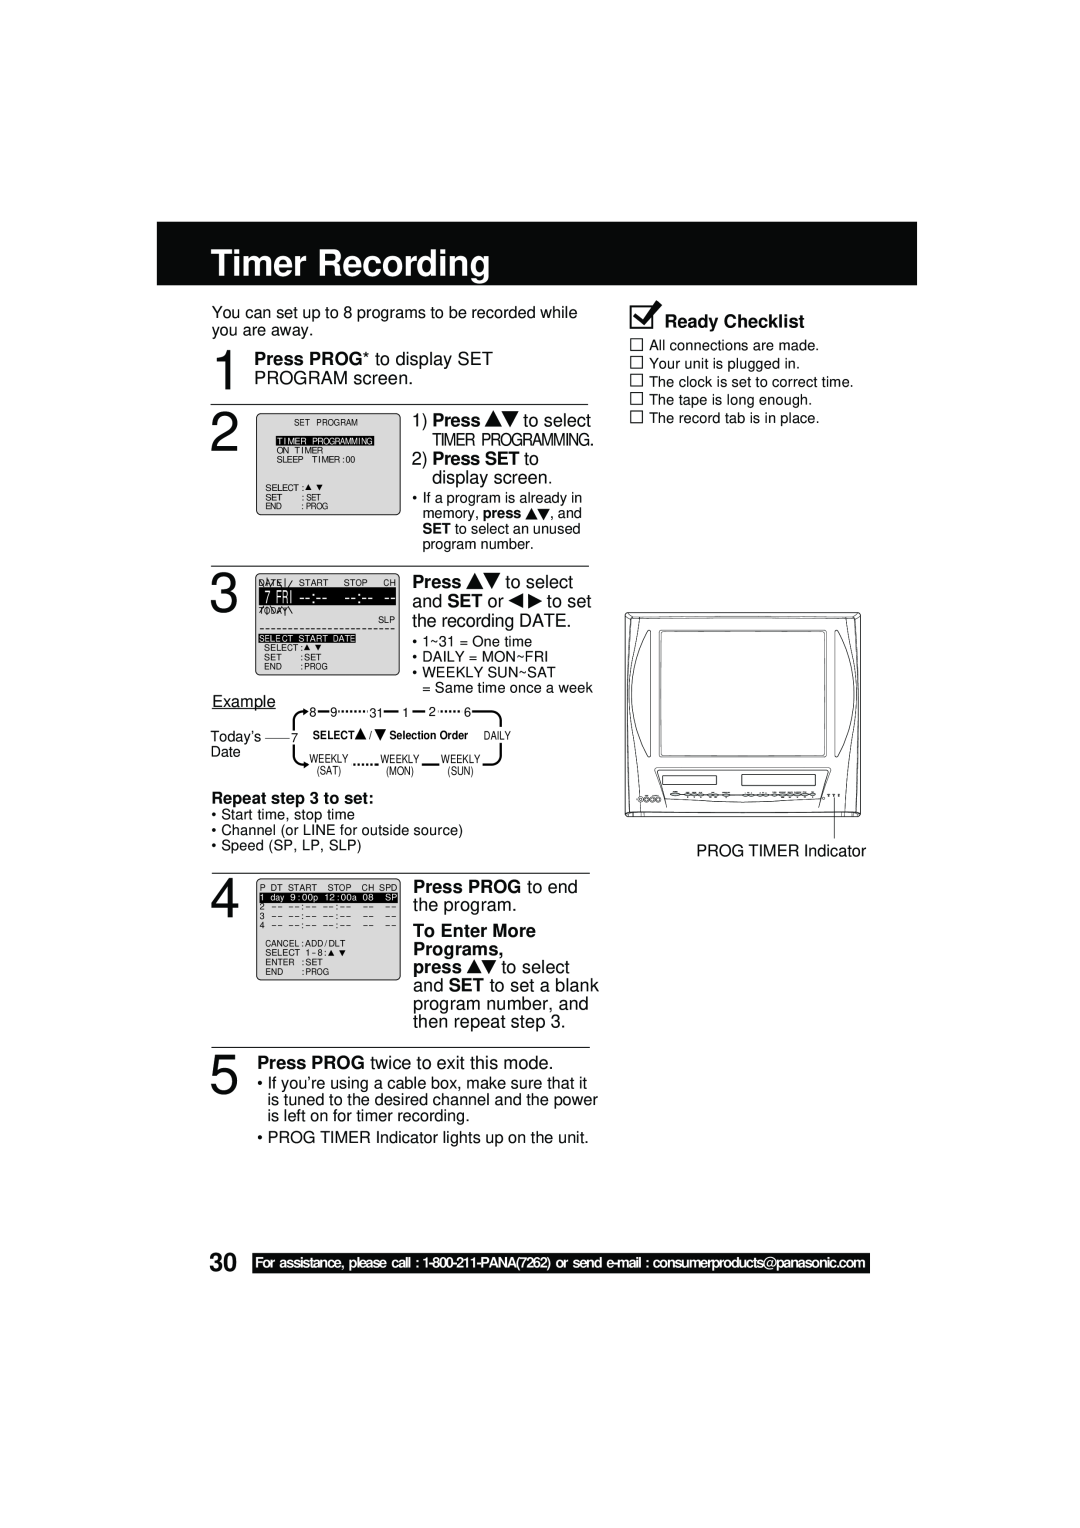 Panasonic PV DM2092 Timer Recording, Press PROG* to display SET PROGRAM screen, Press to select, and SET or, to set, 7 FRI 